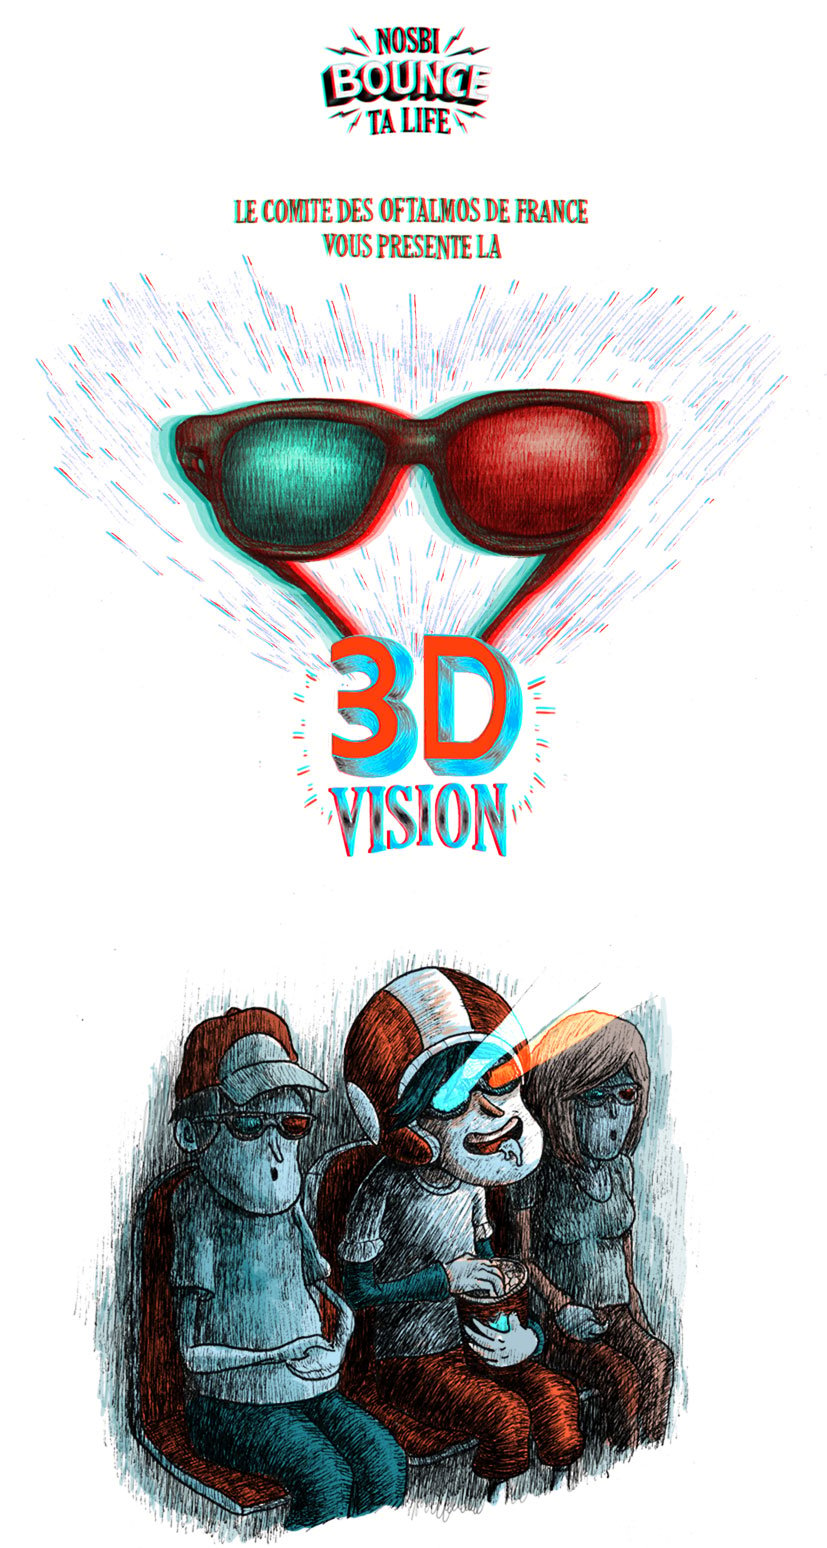 3D VISION!!!!!!